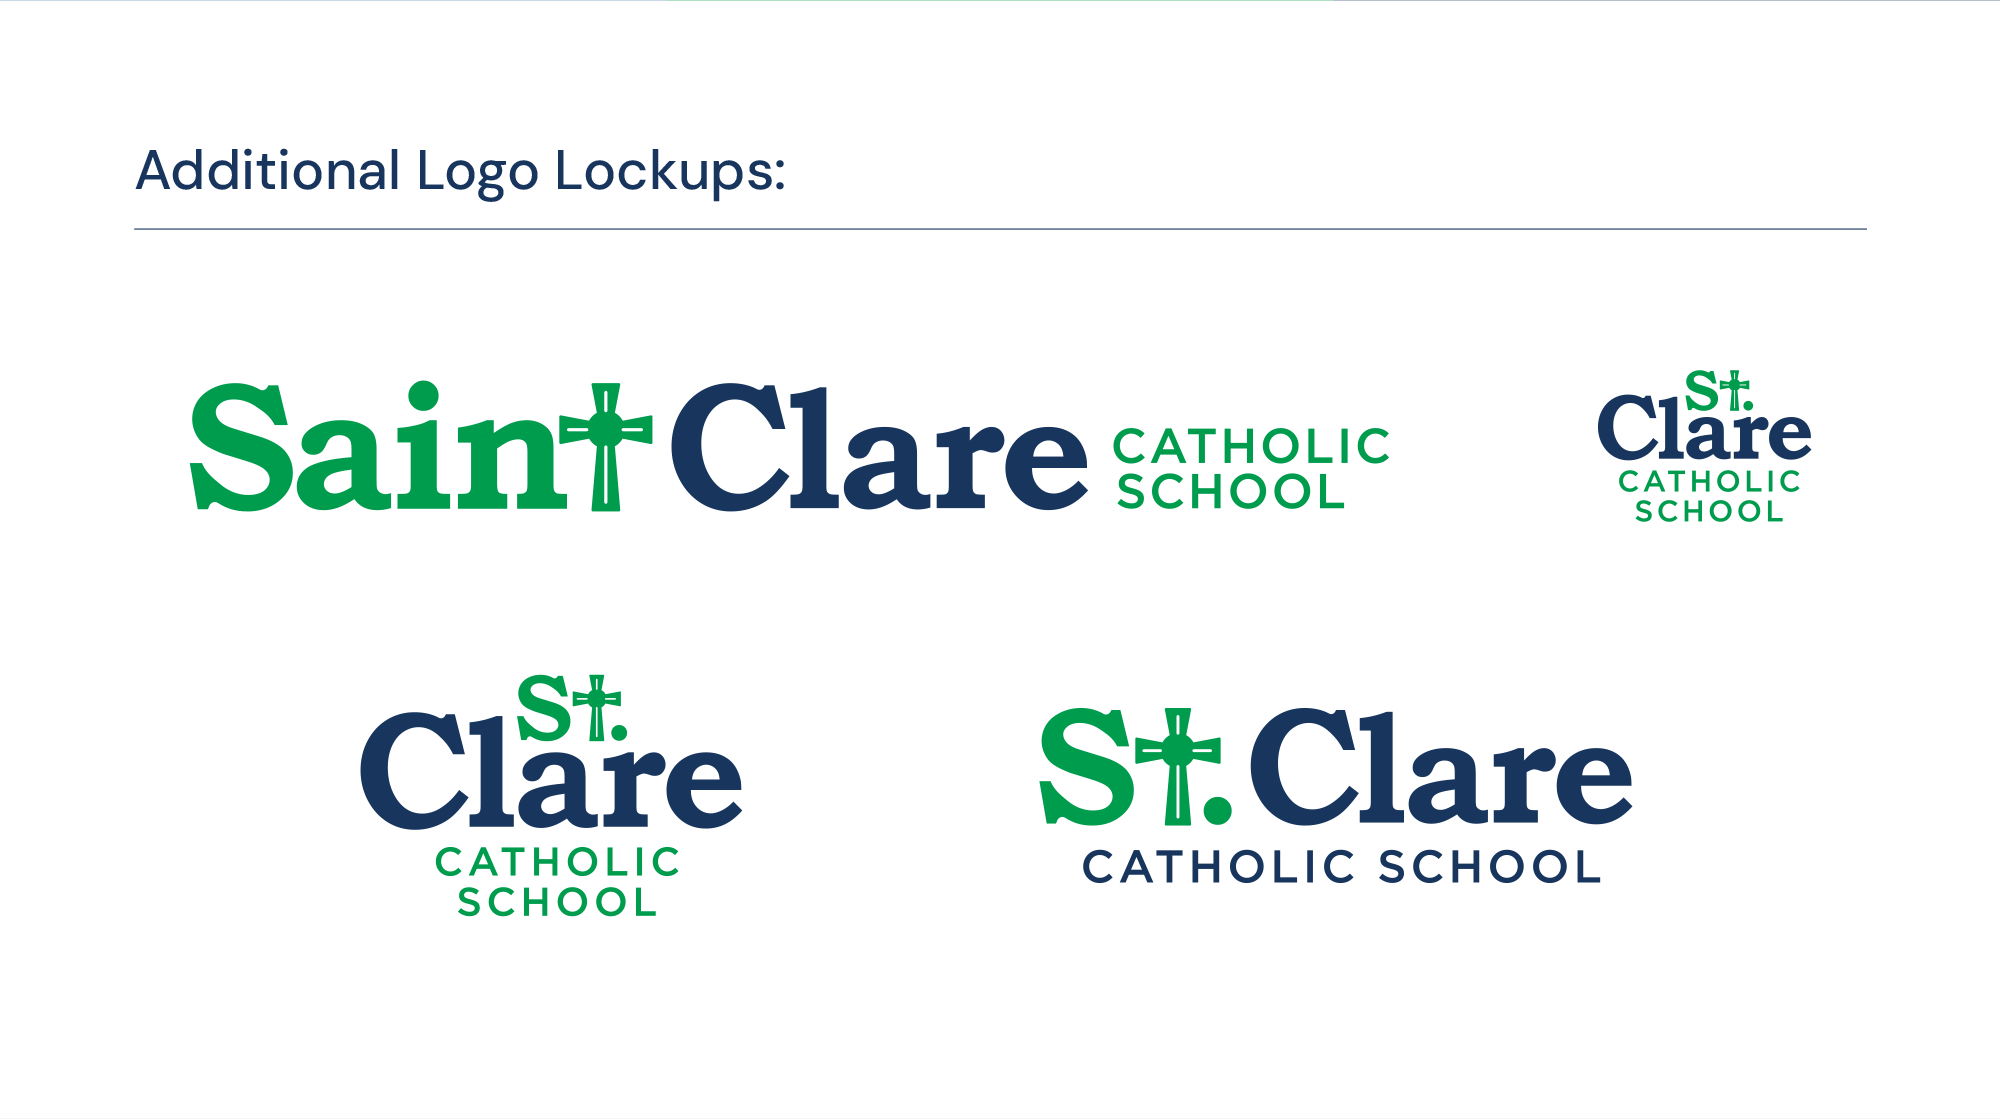 StC logo design lockups